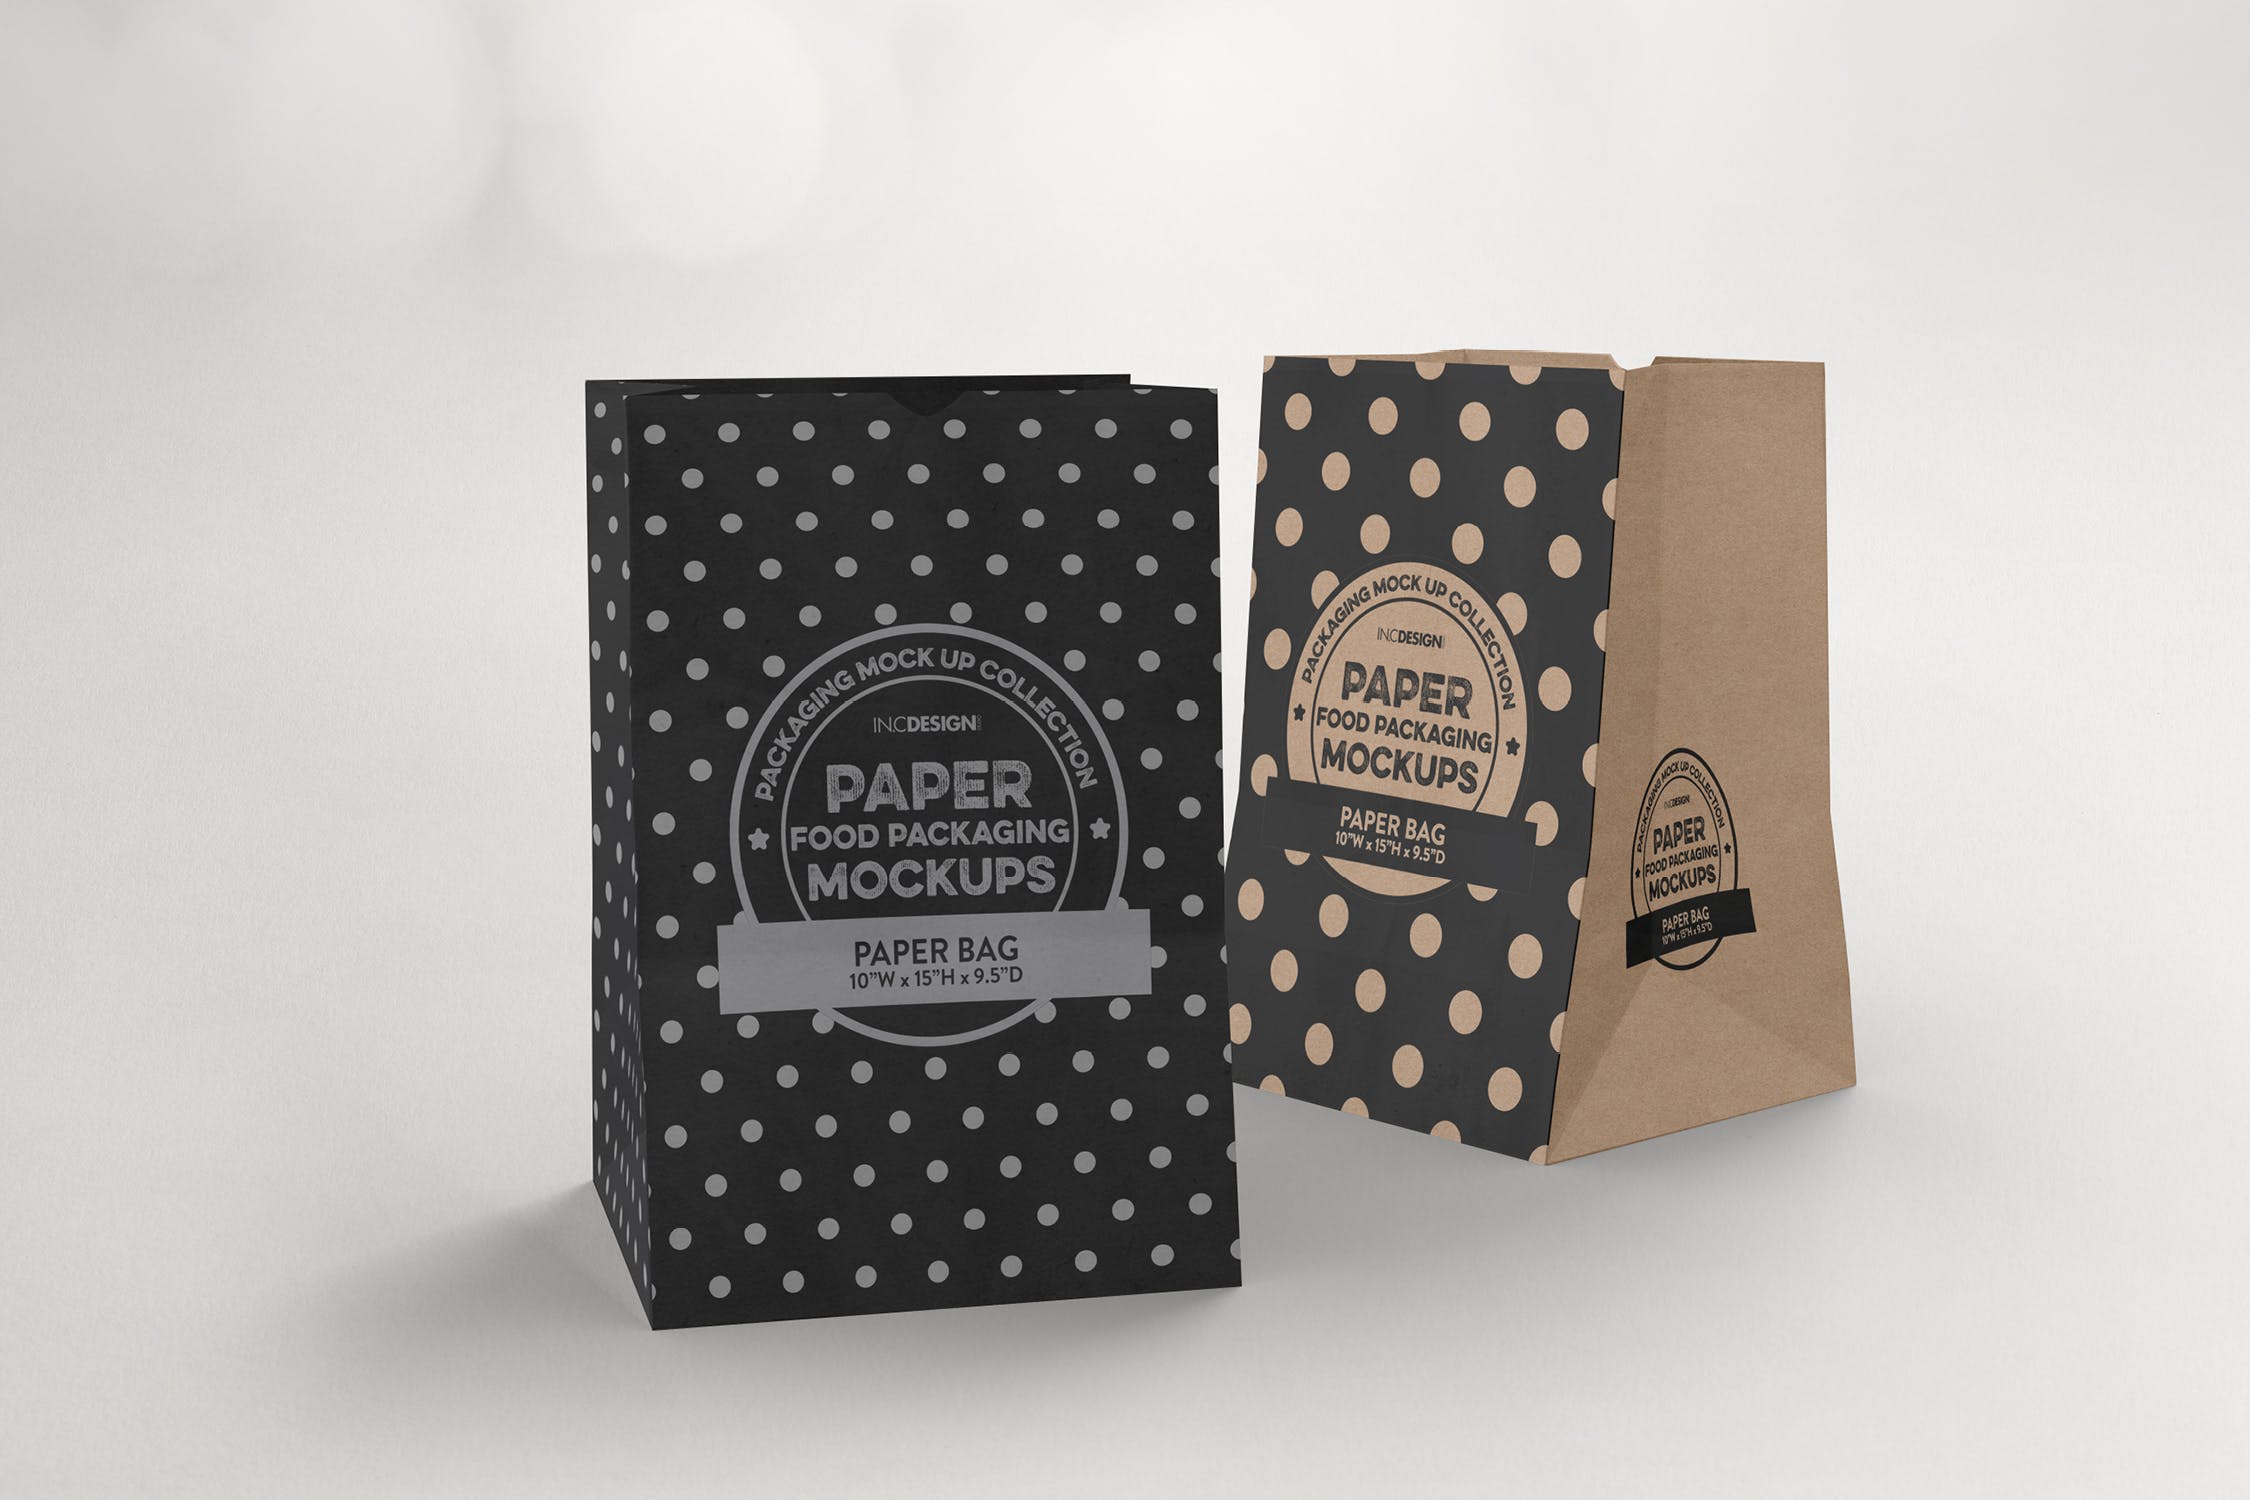 杂货纸袋包装设计效果图素材库精选 Grocery Paper Bags Packaging Mockup插图(2)